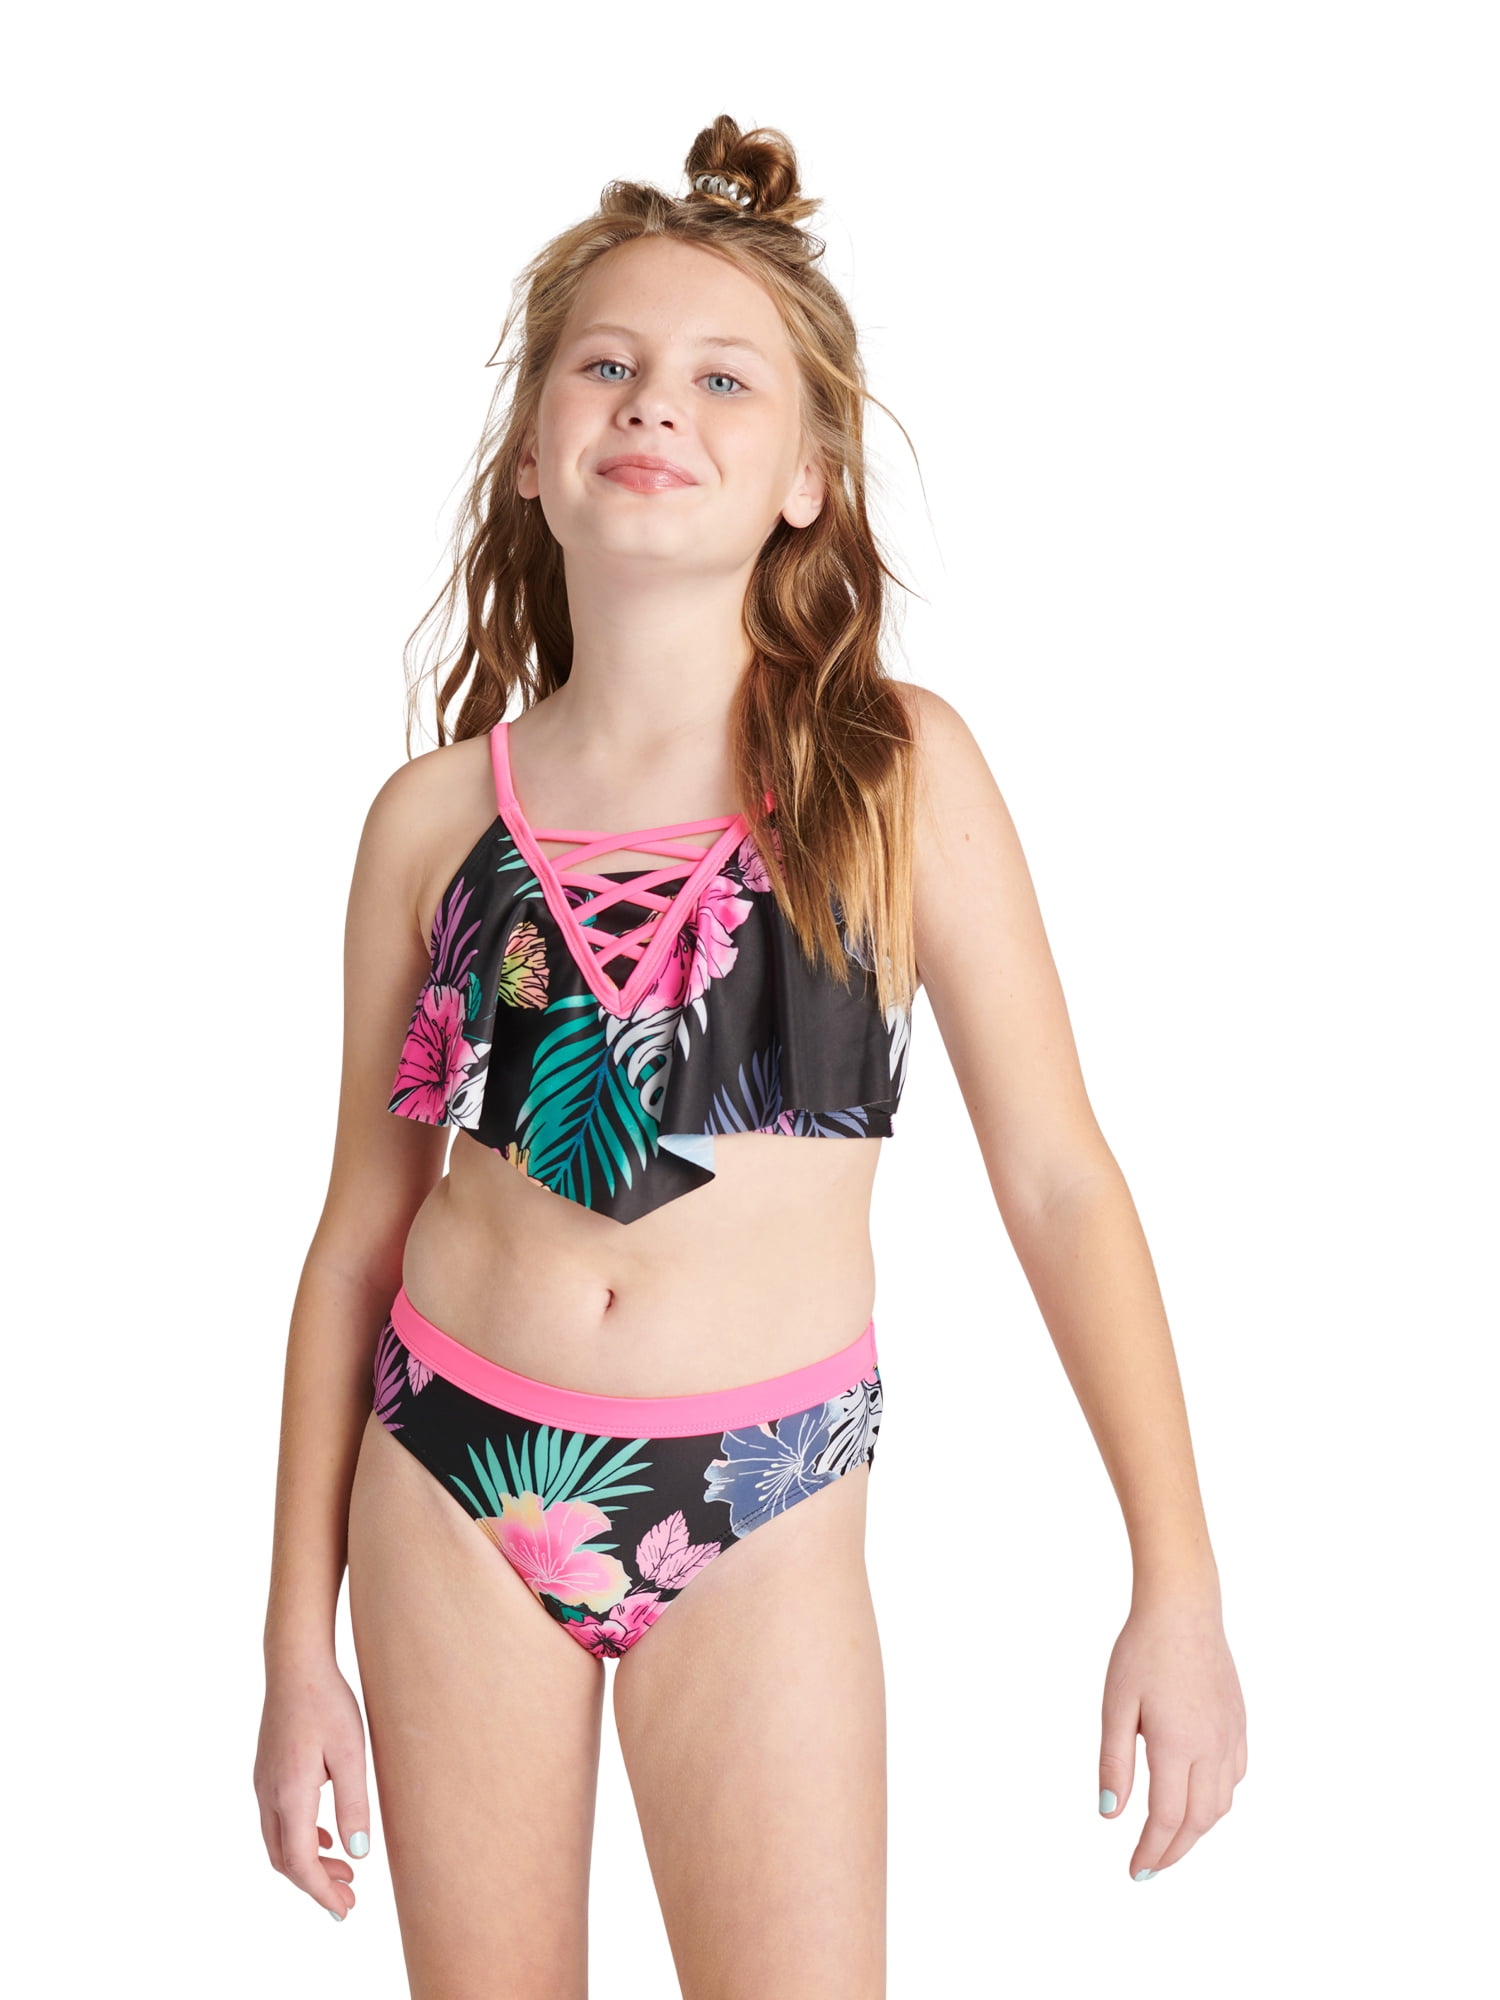 Essentials Girls and Toddlers' 2-Piece Bikini Set 